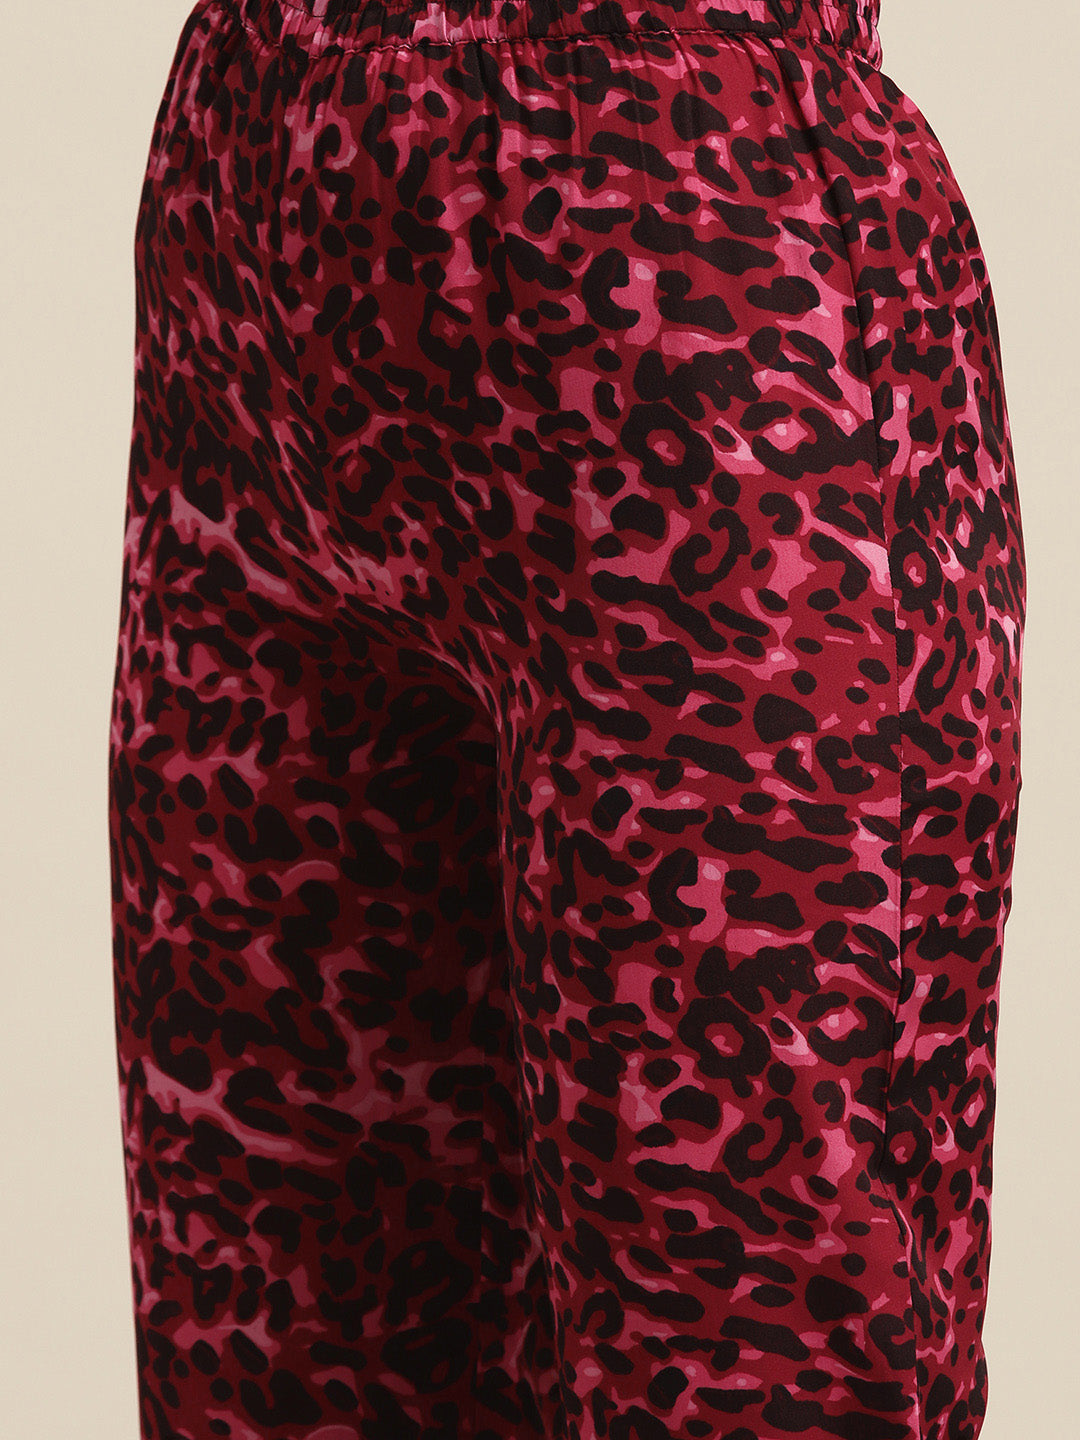 Wine & black leopard print crepe shirt and pant set